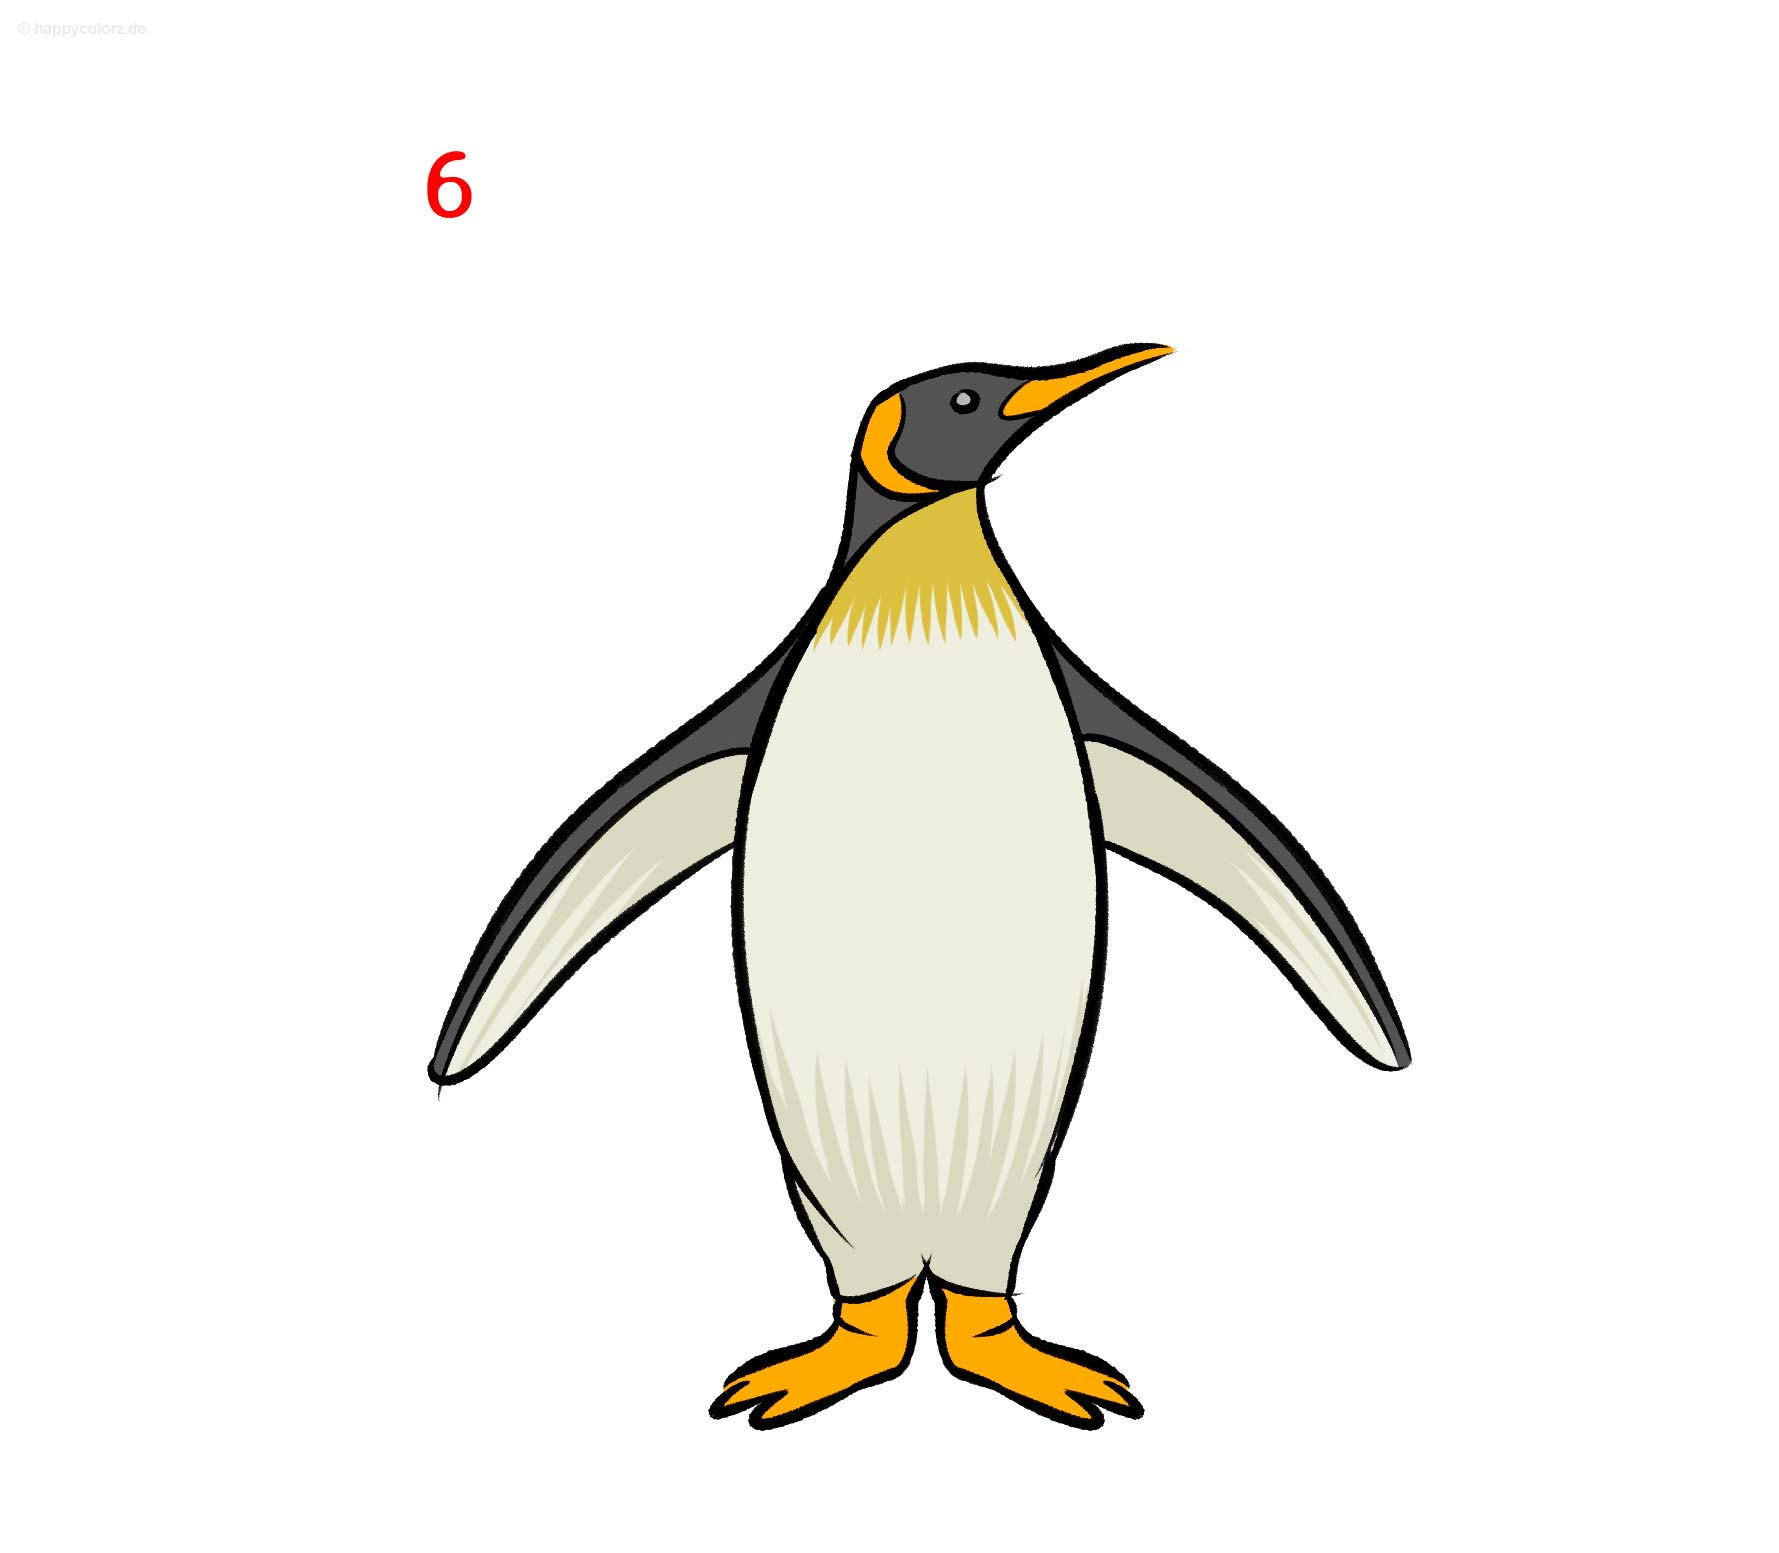 Pinguin malen - Schritt für Schritt